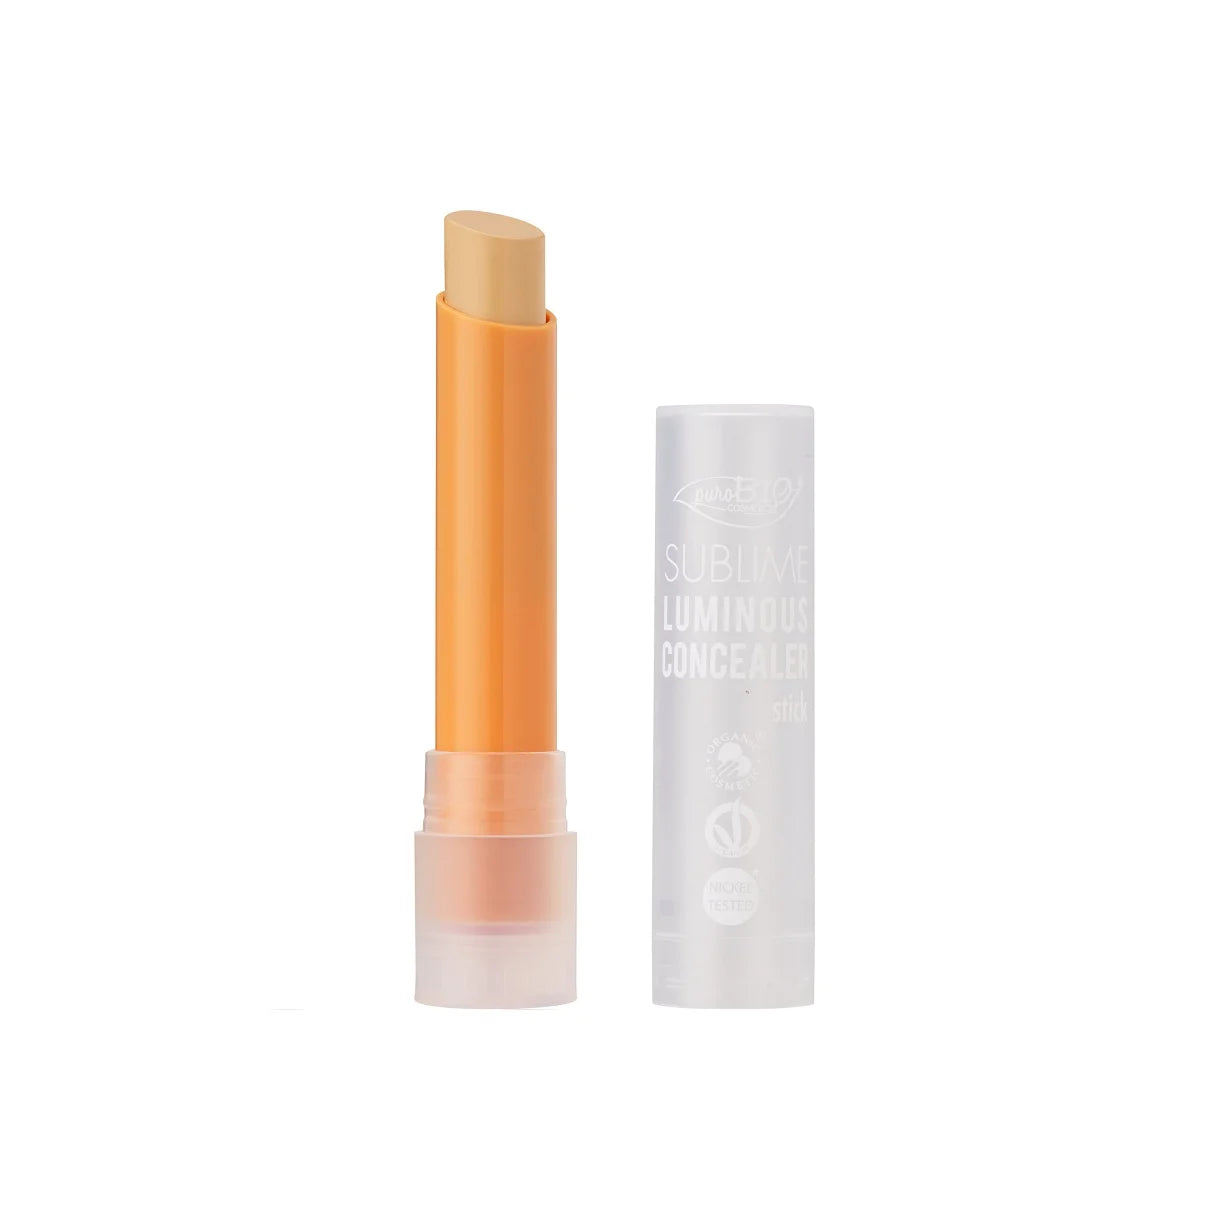 Se puroBIO Cosmetics - Sublime Luminous Concealer Stick 03 hos Frisøren og Baronen